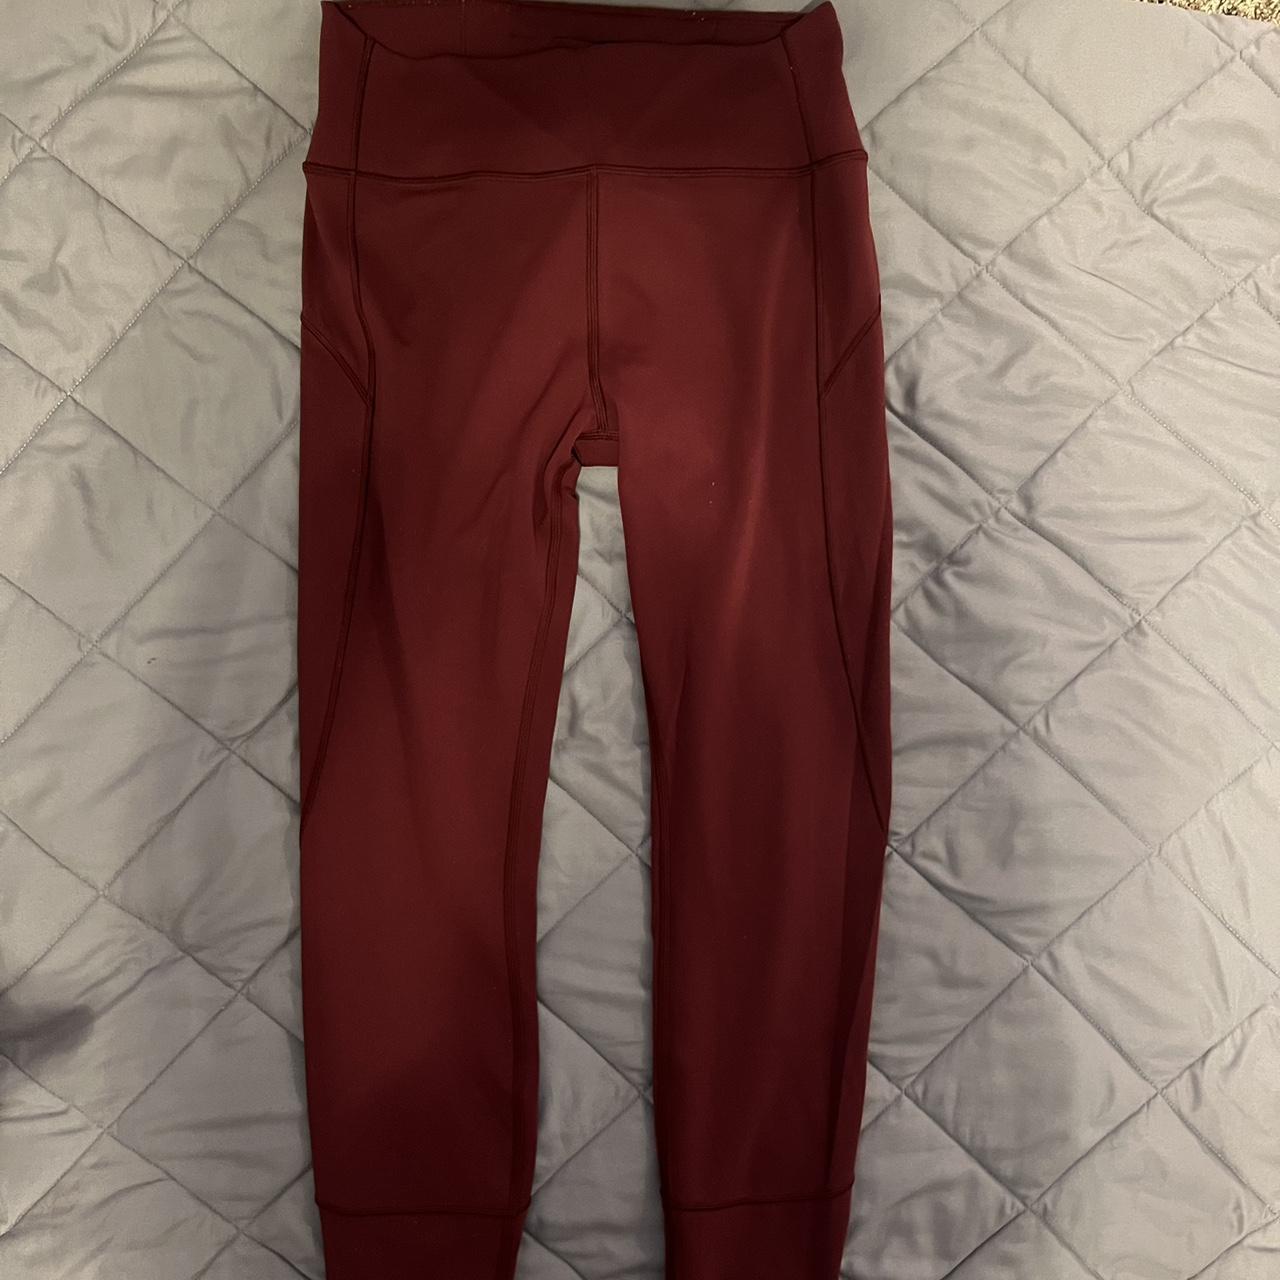 Maroon Lululemon align leggings with pockets!, Size